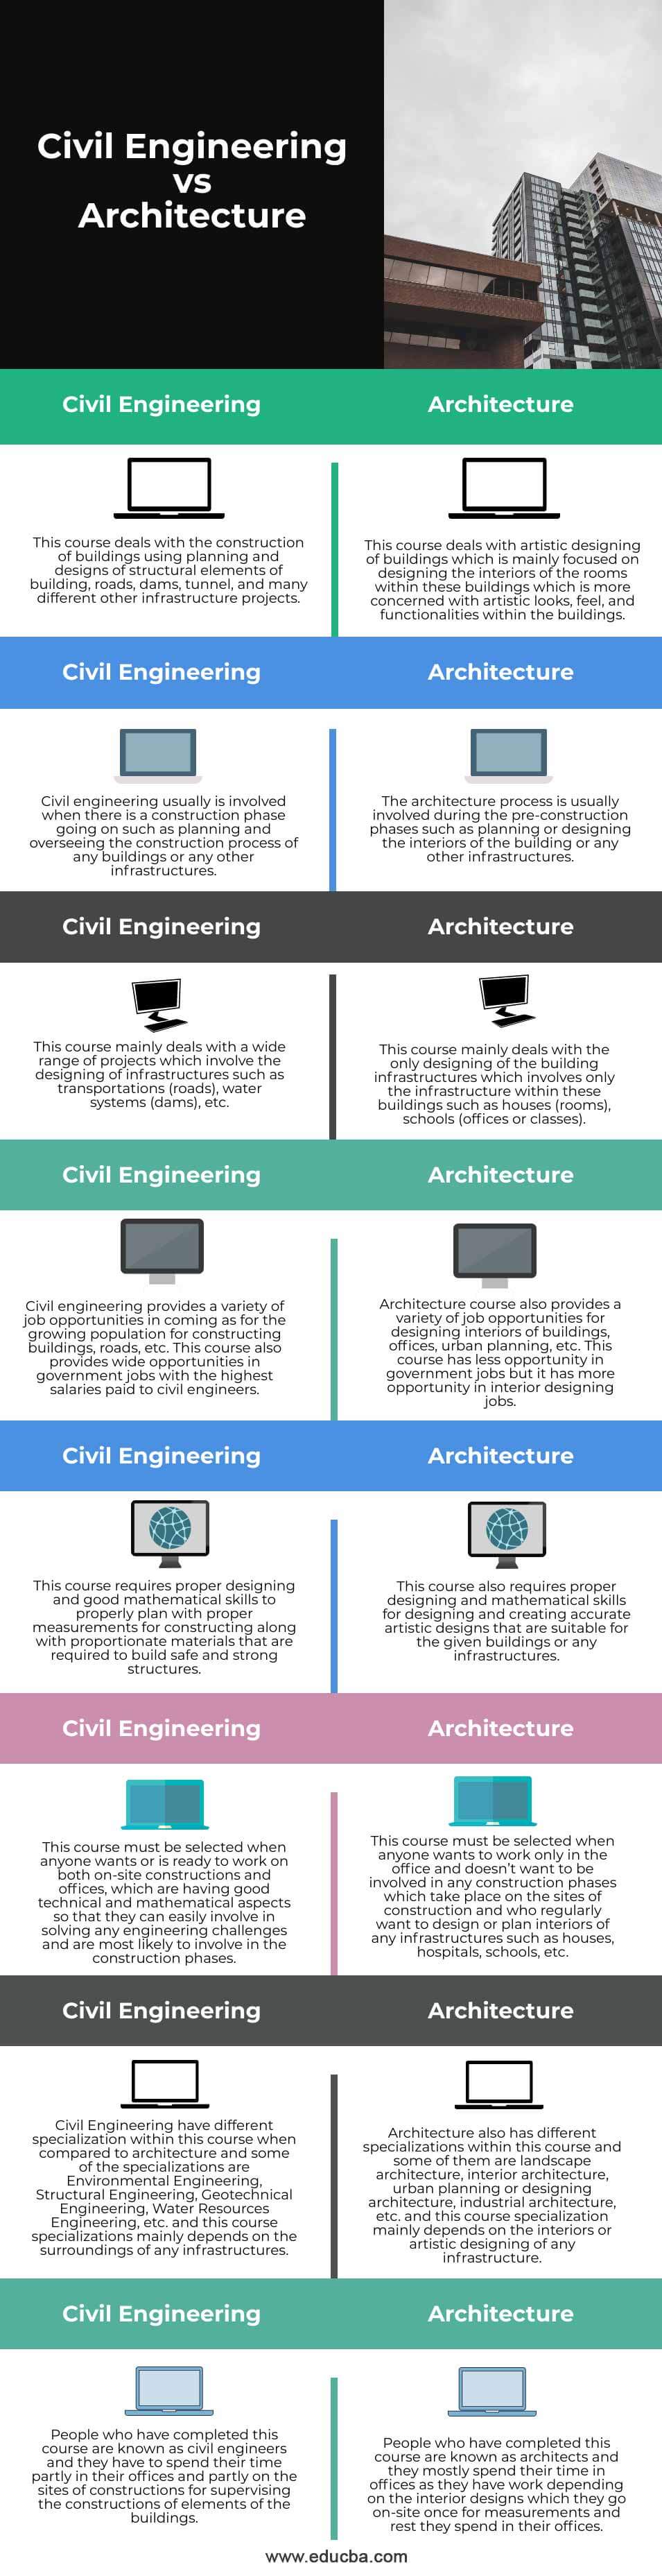 Civil-Engineering-vs-Architecture-info